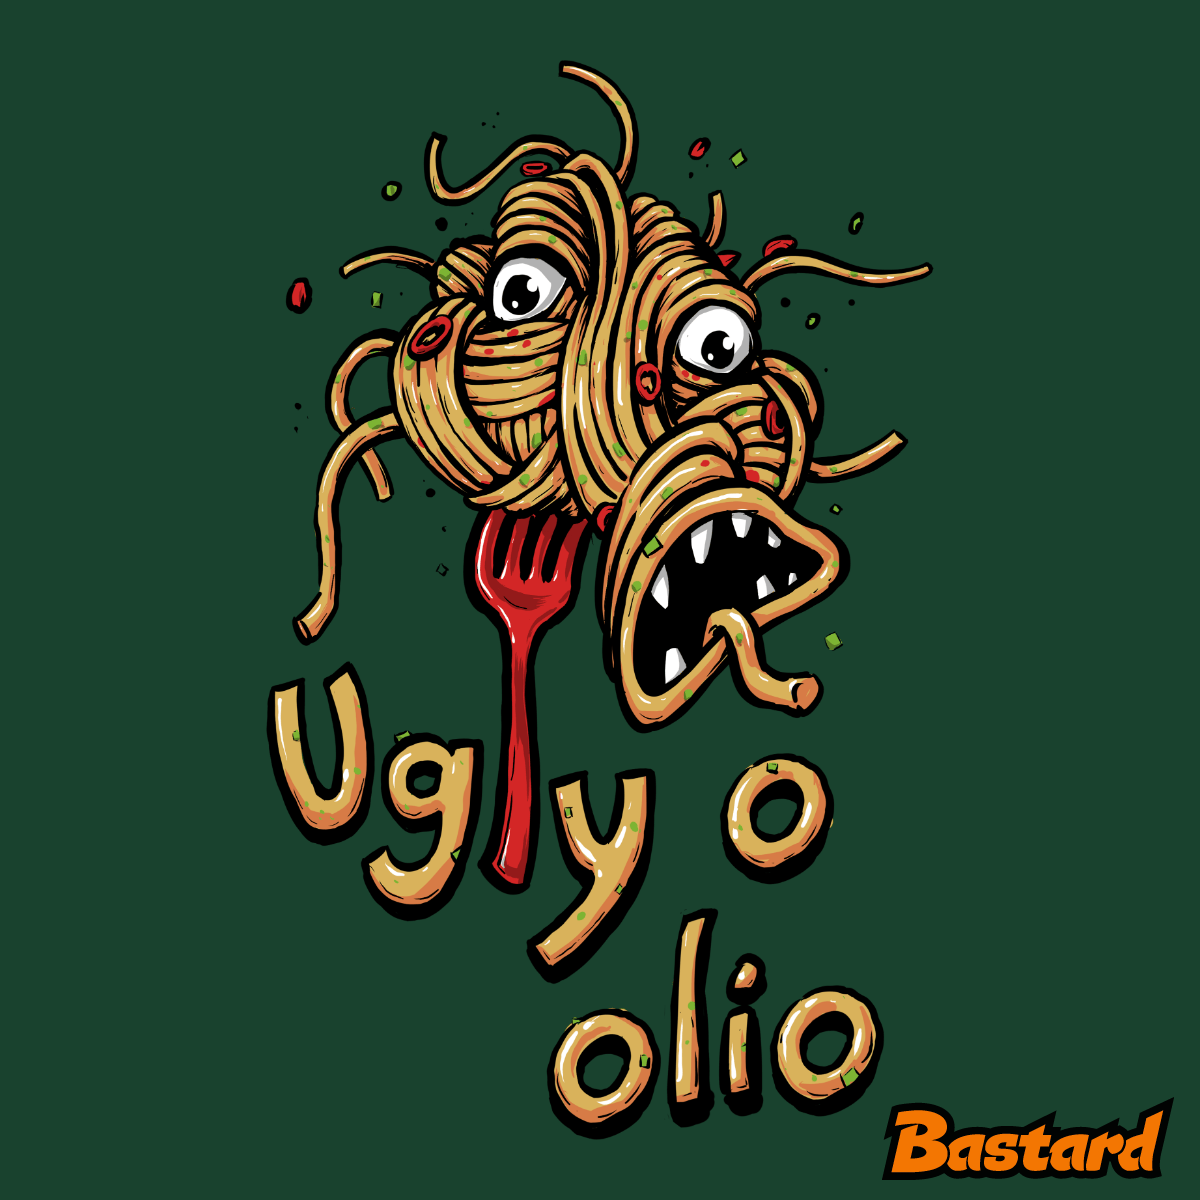 Ugly o olio